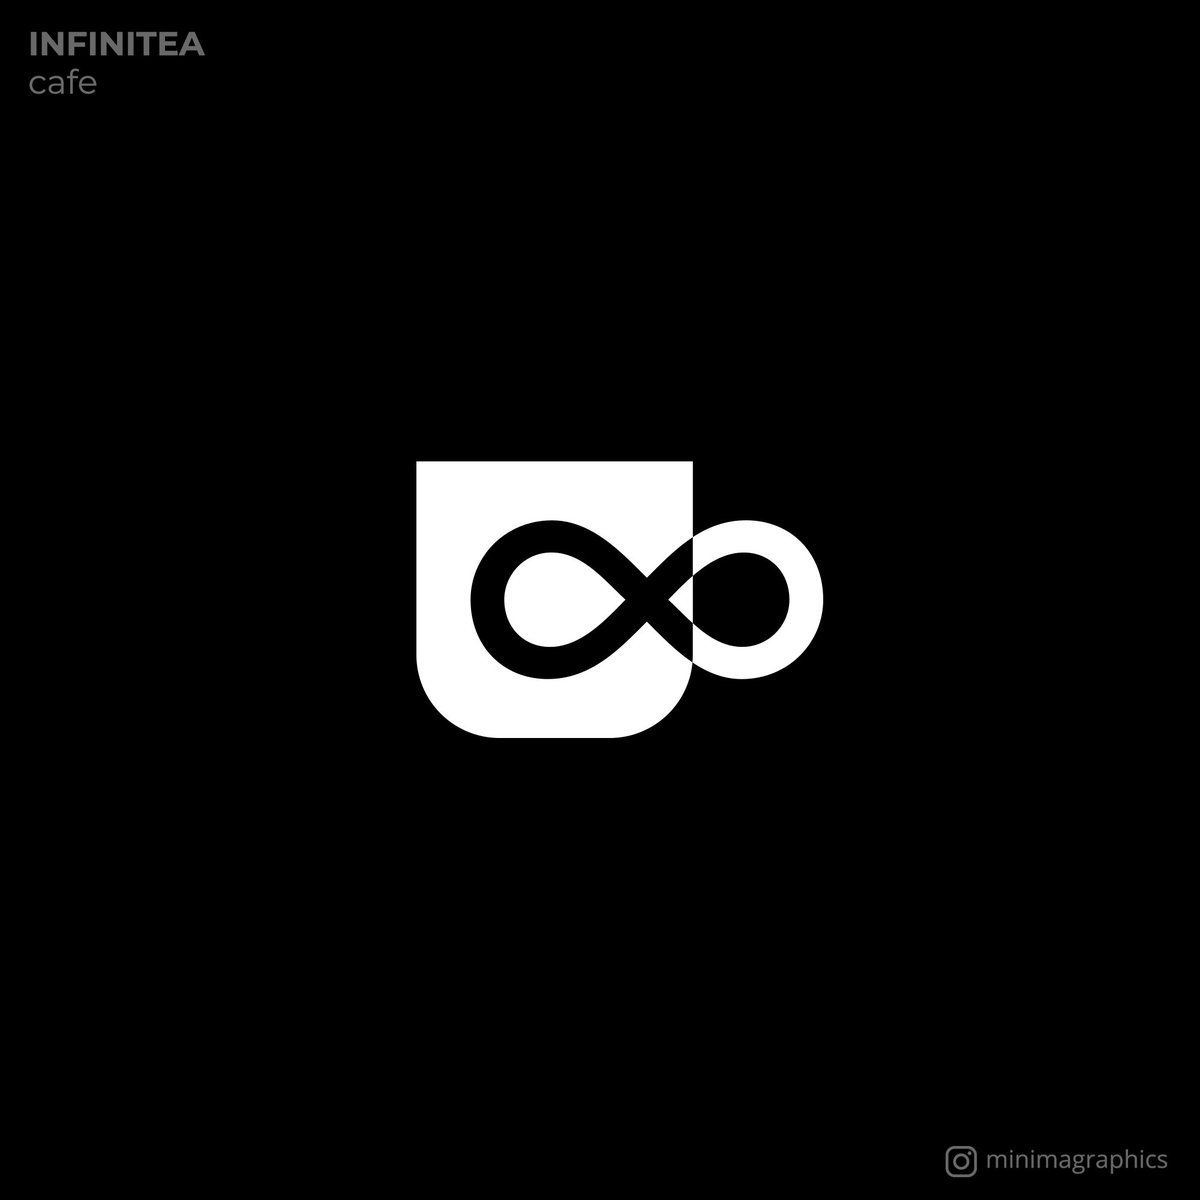 Logo for Infinitea, a modern café!

Follow my other works: instagram.com/minimagraphics

#cafe #cafelogo #tea #coffee #logo #graphicdesign #logodesign #branding #design #brand #brandidentity #logodesigner #marketing #freelancegraphicdesign